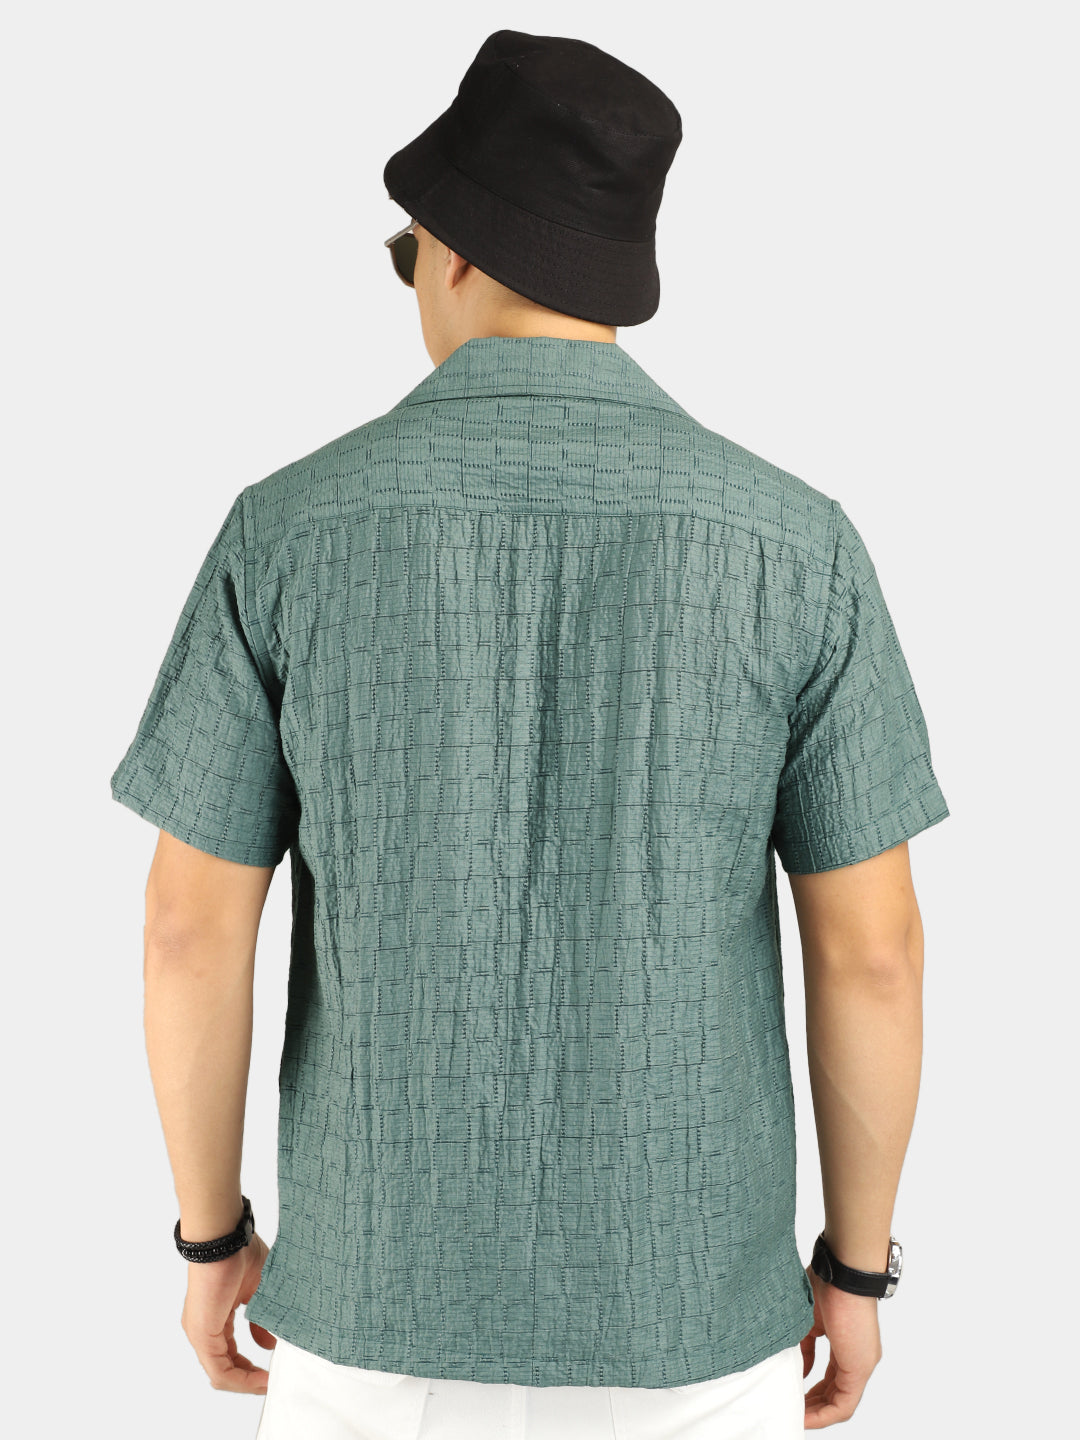 Crotchet Dark Green Half Sleeve Shirt